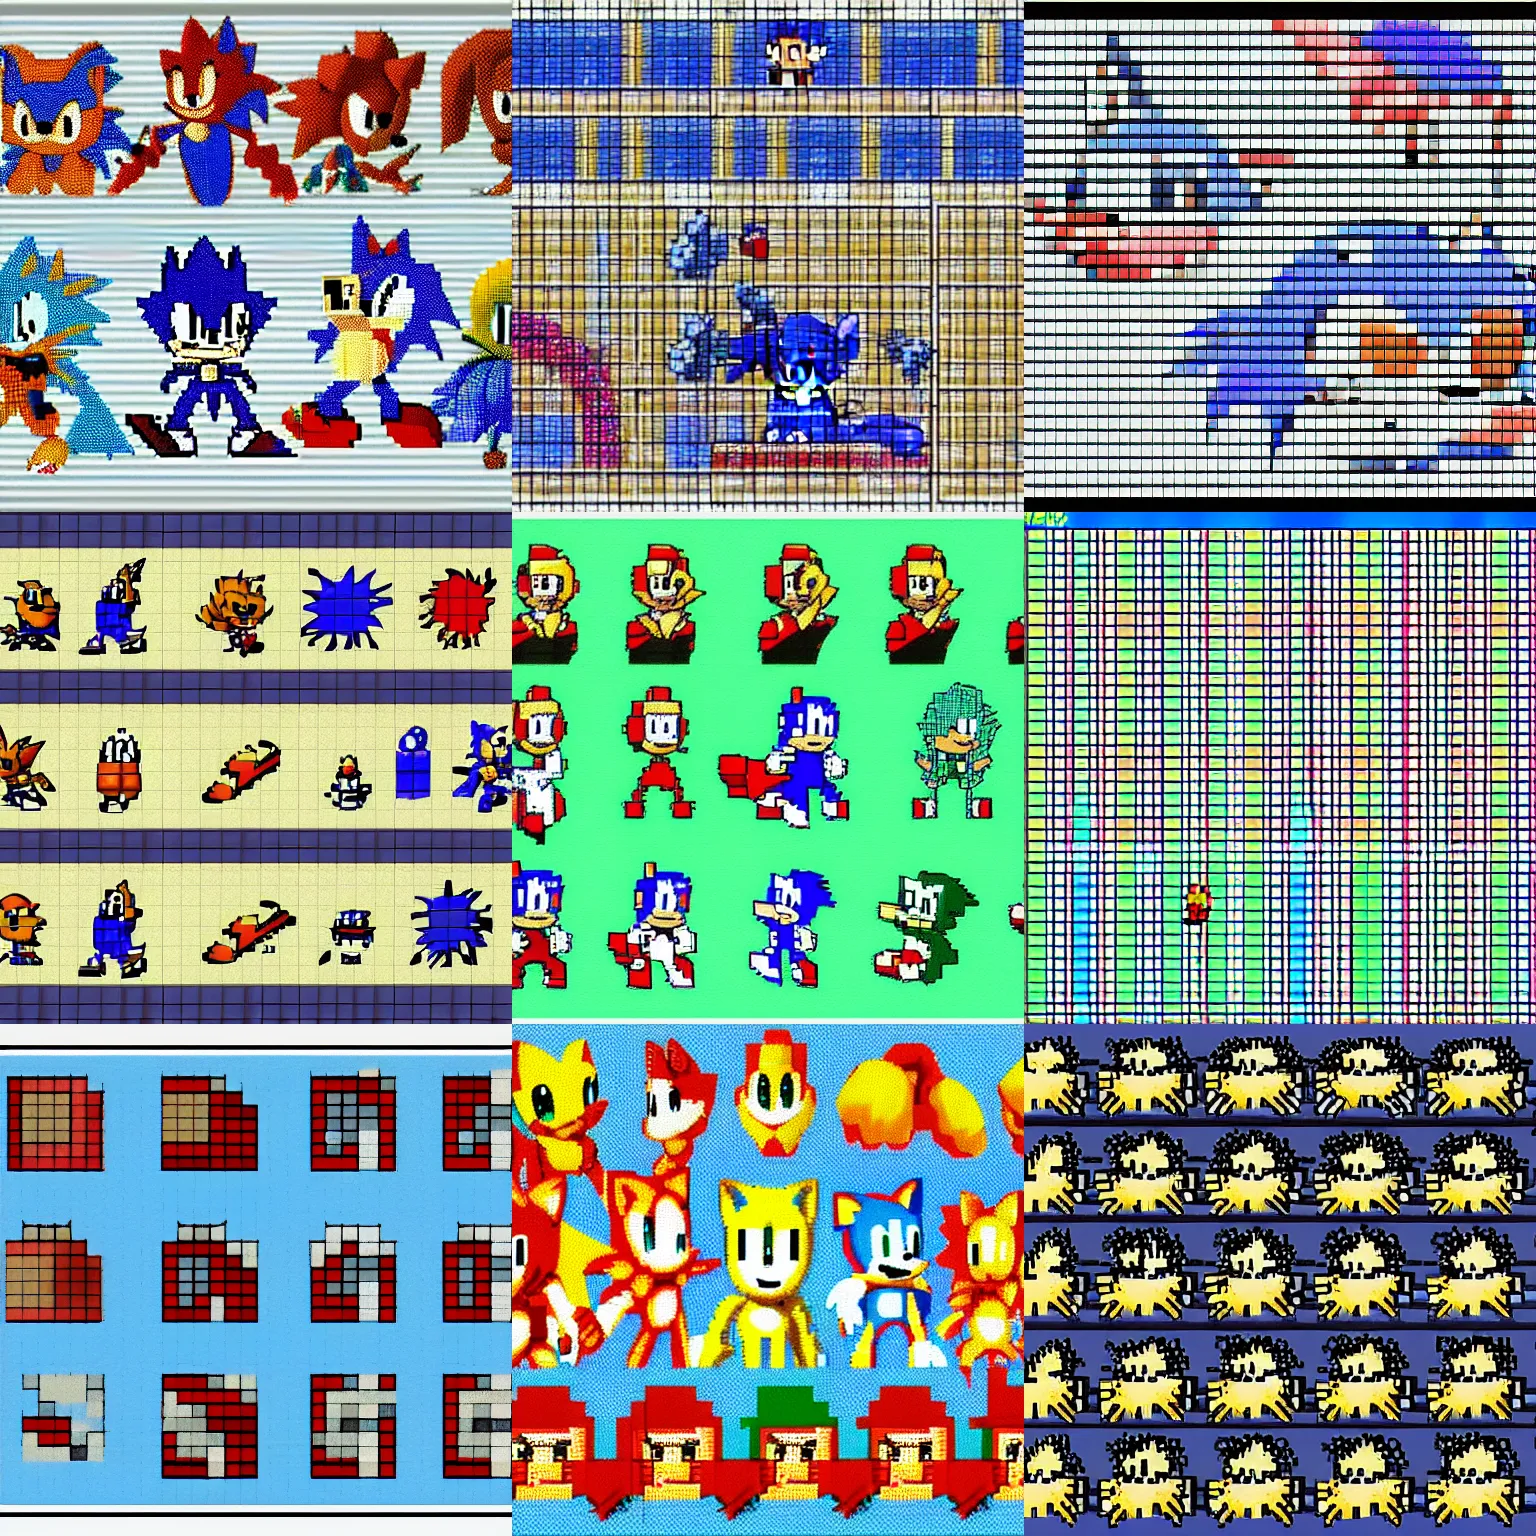 Mat The Pixel-Artist on Game Jolt: December 2022 Sonic Sprites